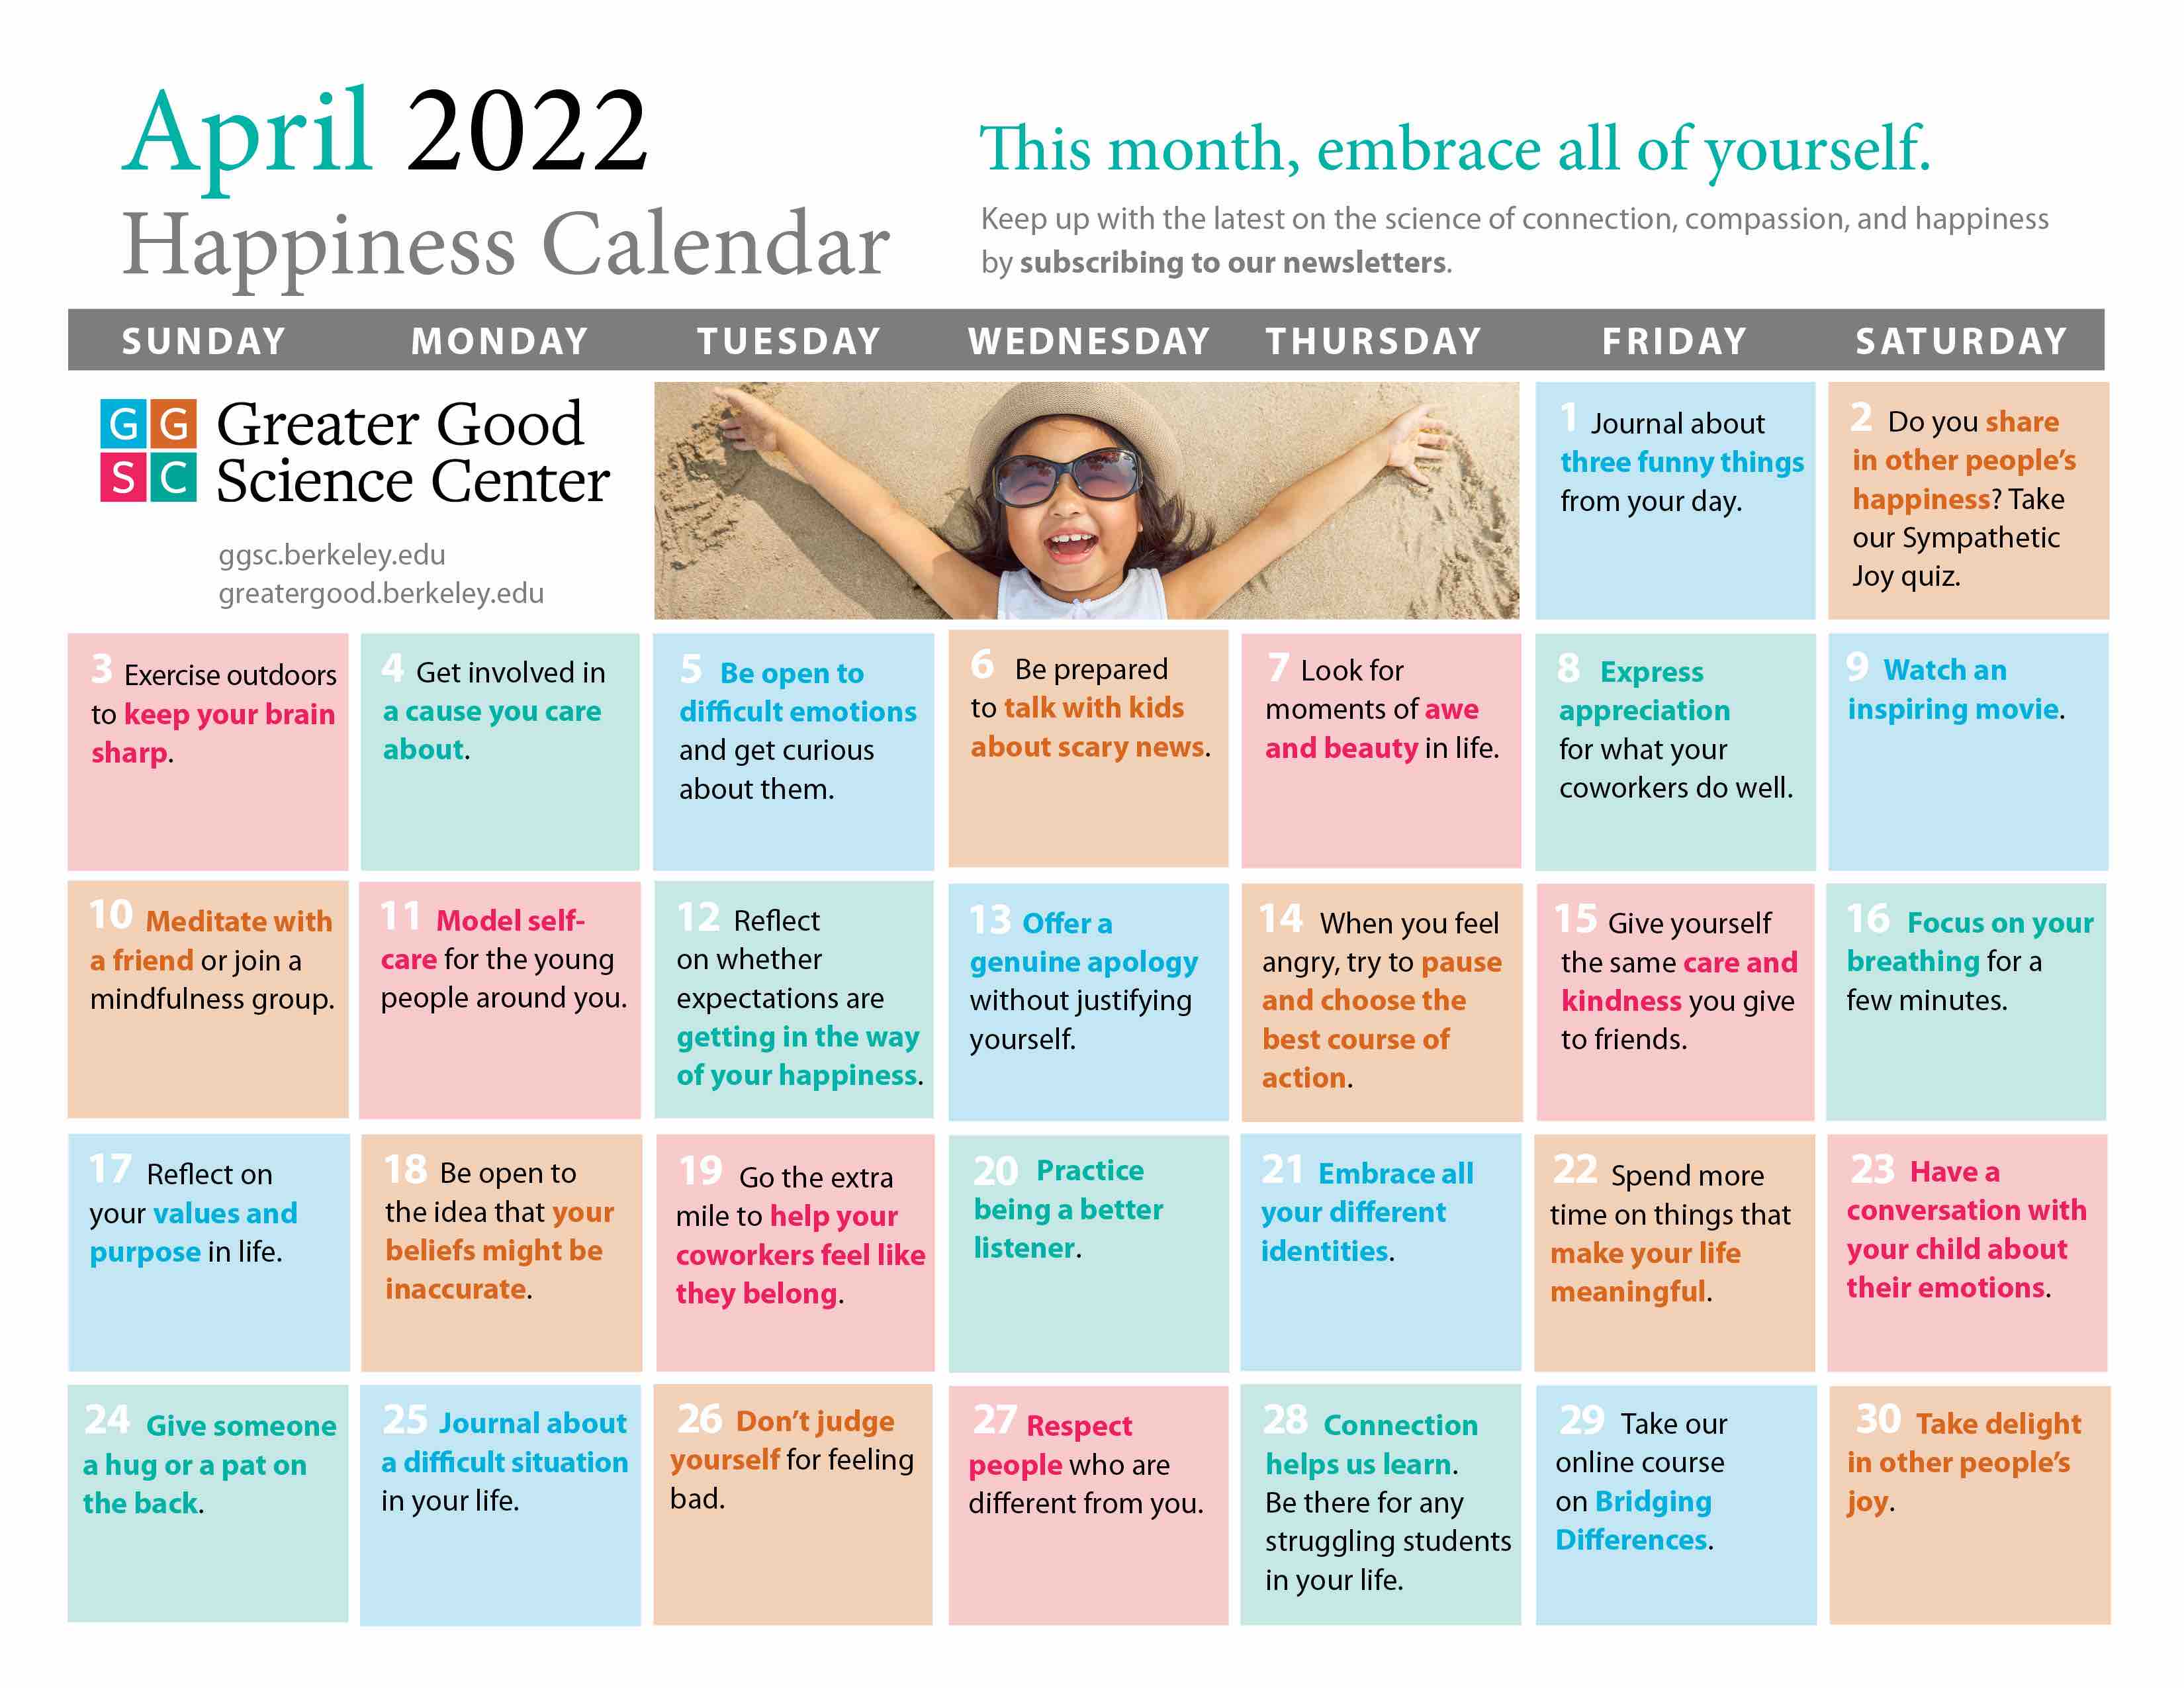 April 2022 happiness calendar